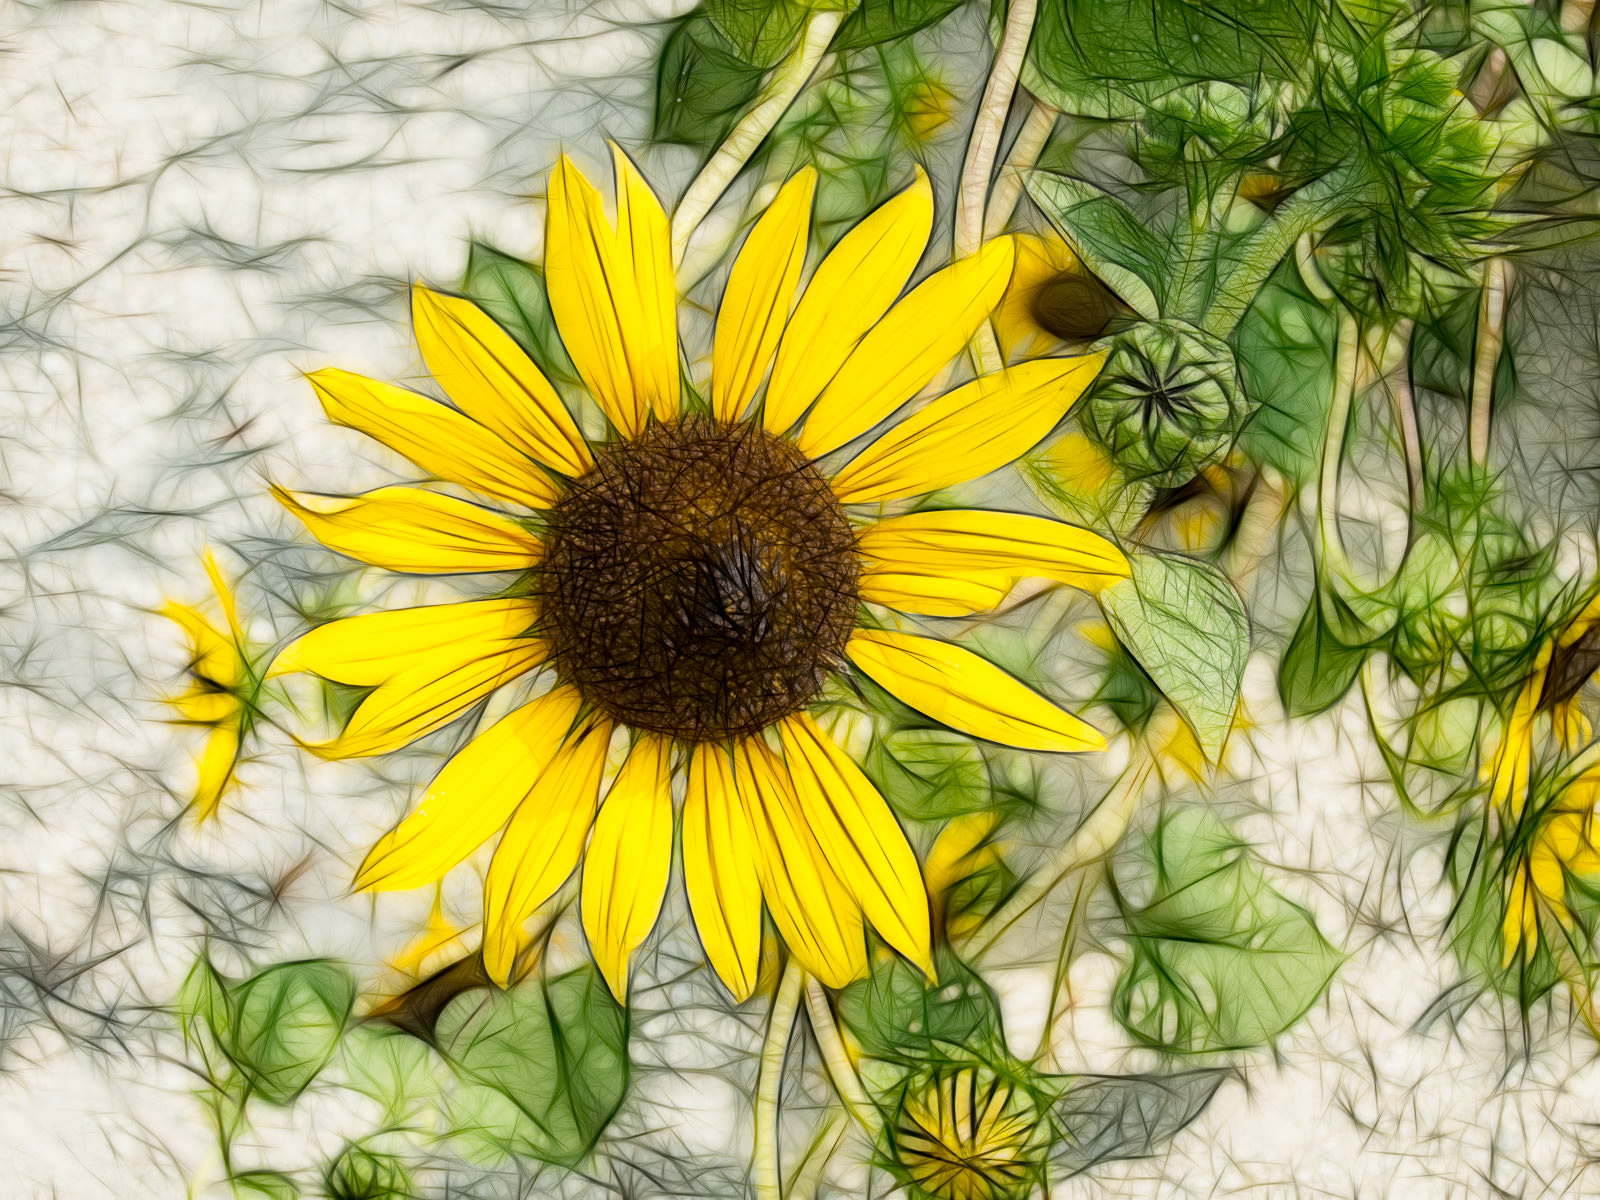 Sunflowers on the Meadowlark Trail